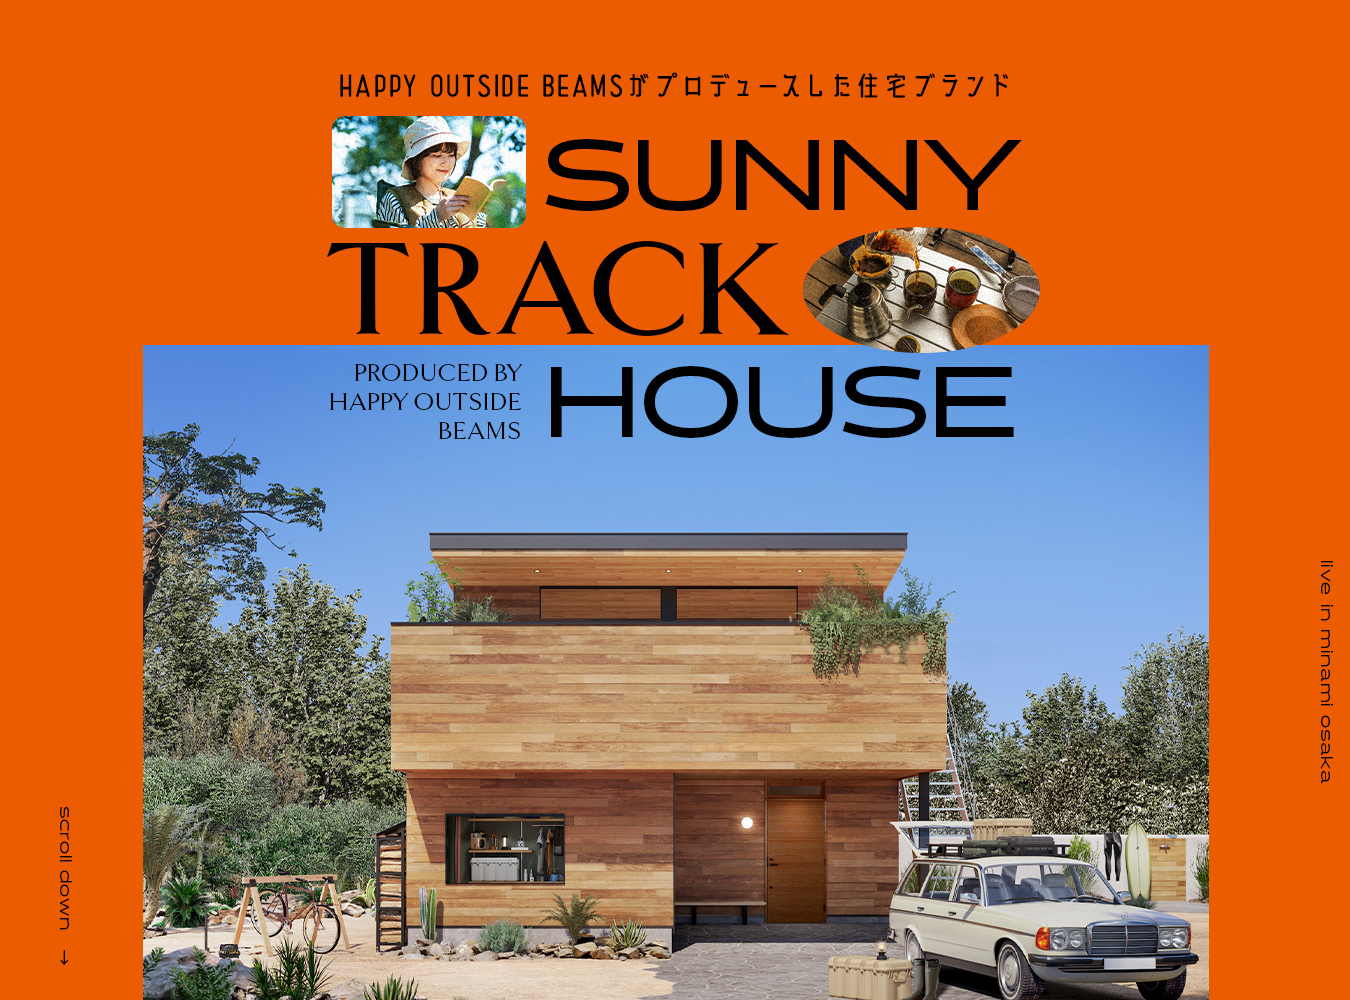 SUNNY TRACK HOUSE